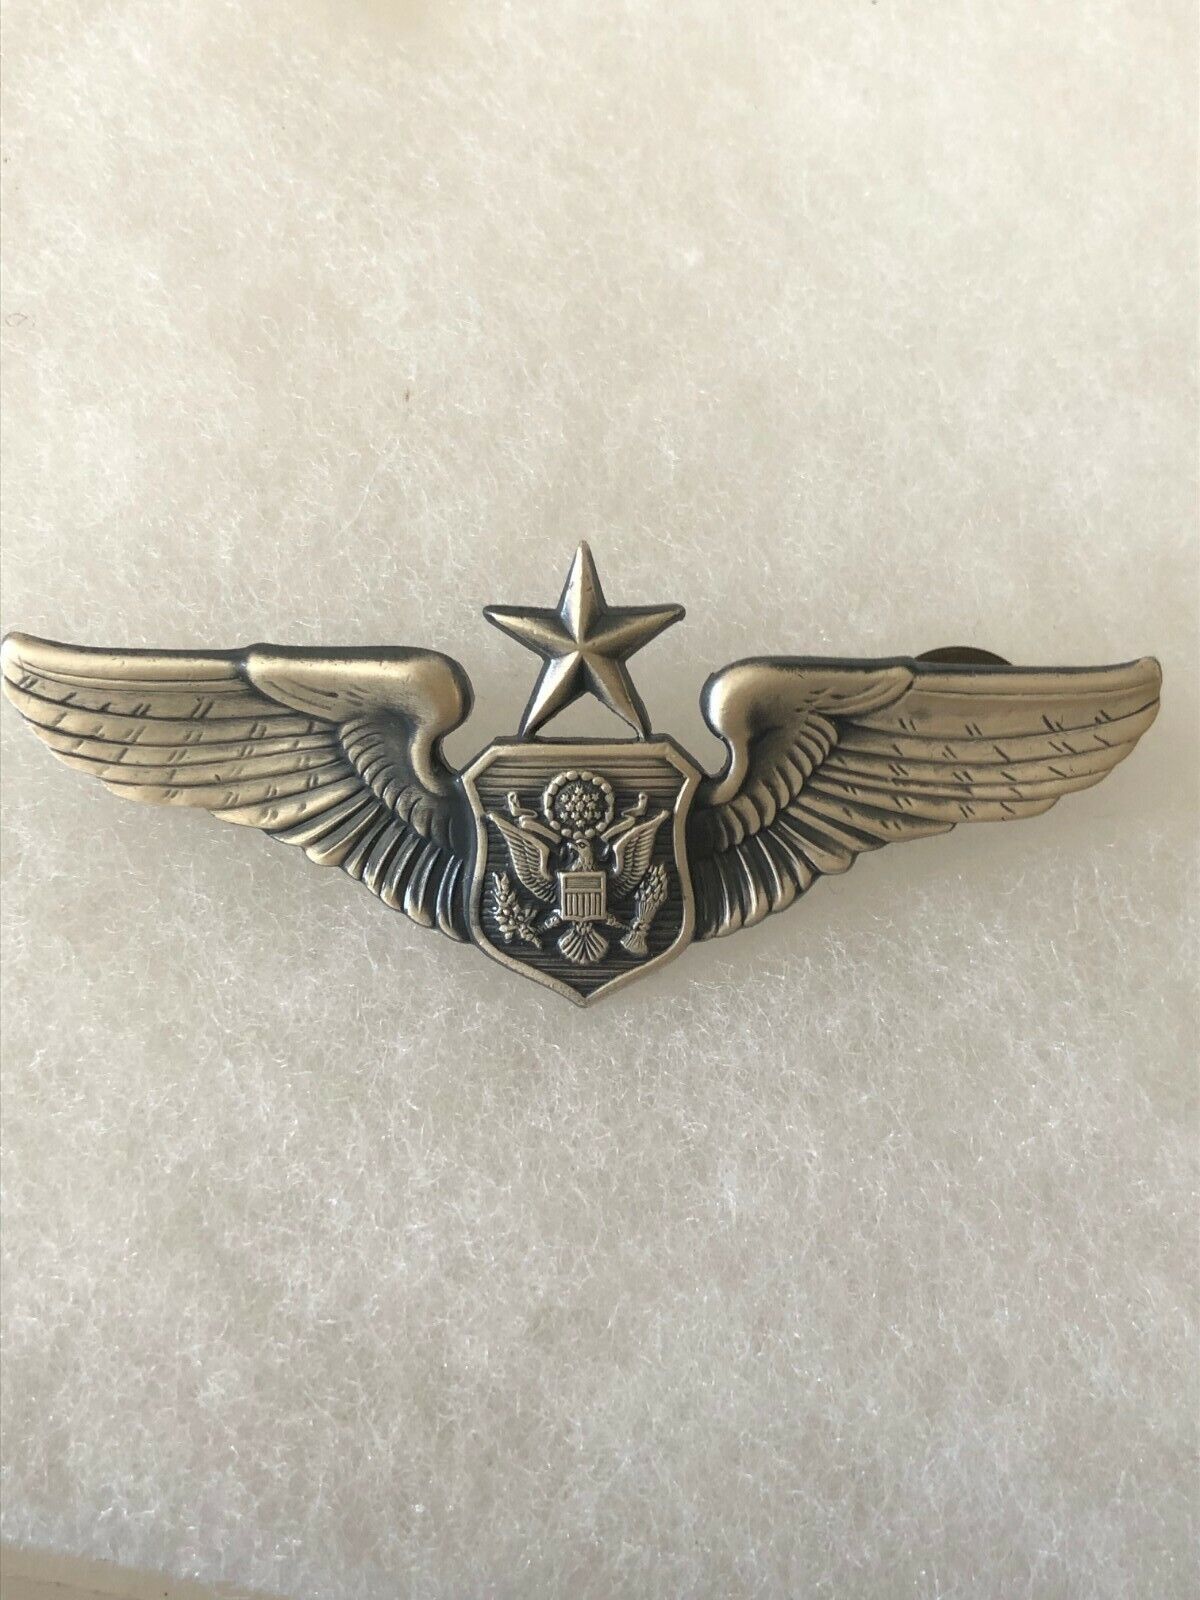 Post WW2 Era Senior Aircrew Officer Wings 